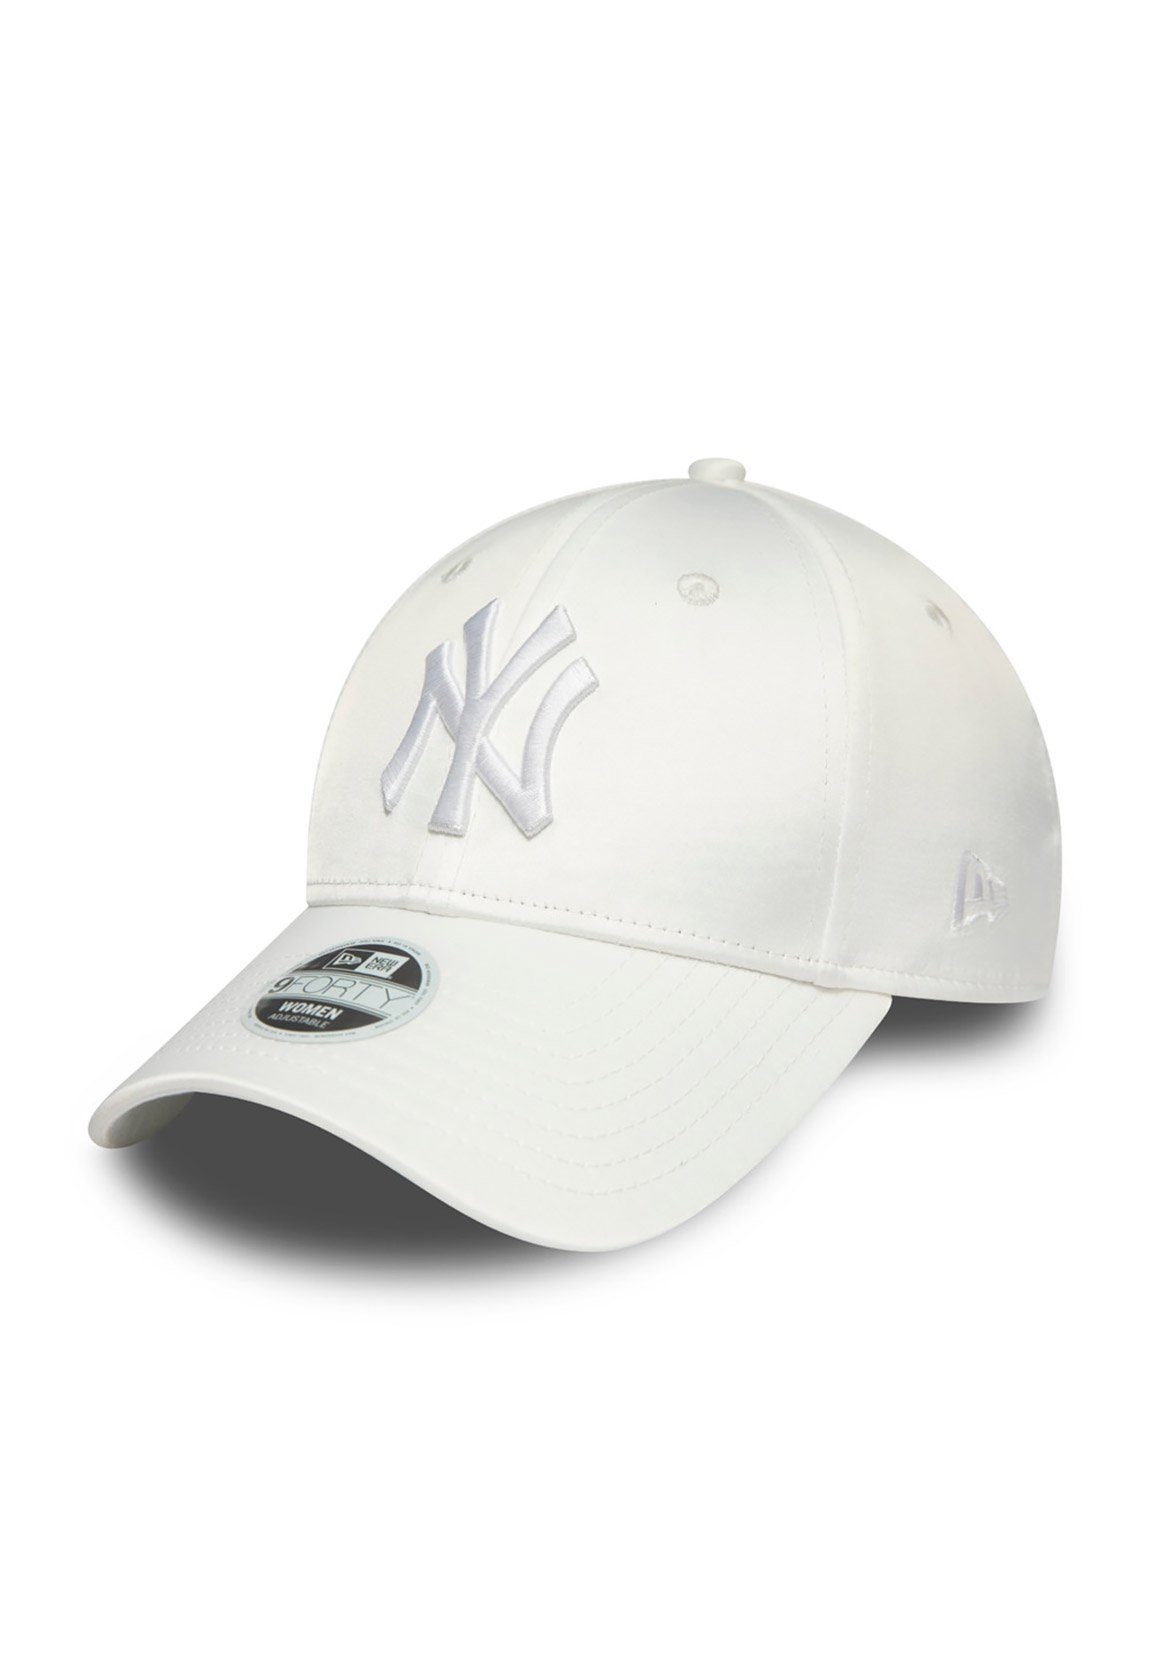 New Era Baseball Cap 9Forty SATIN New York Yankees